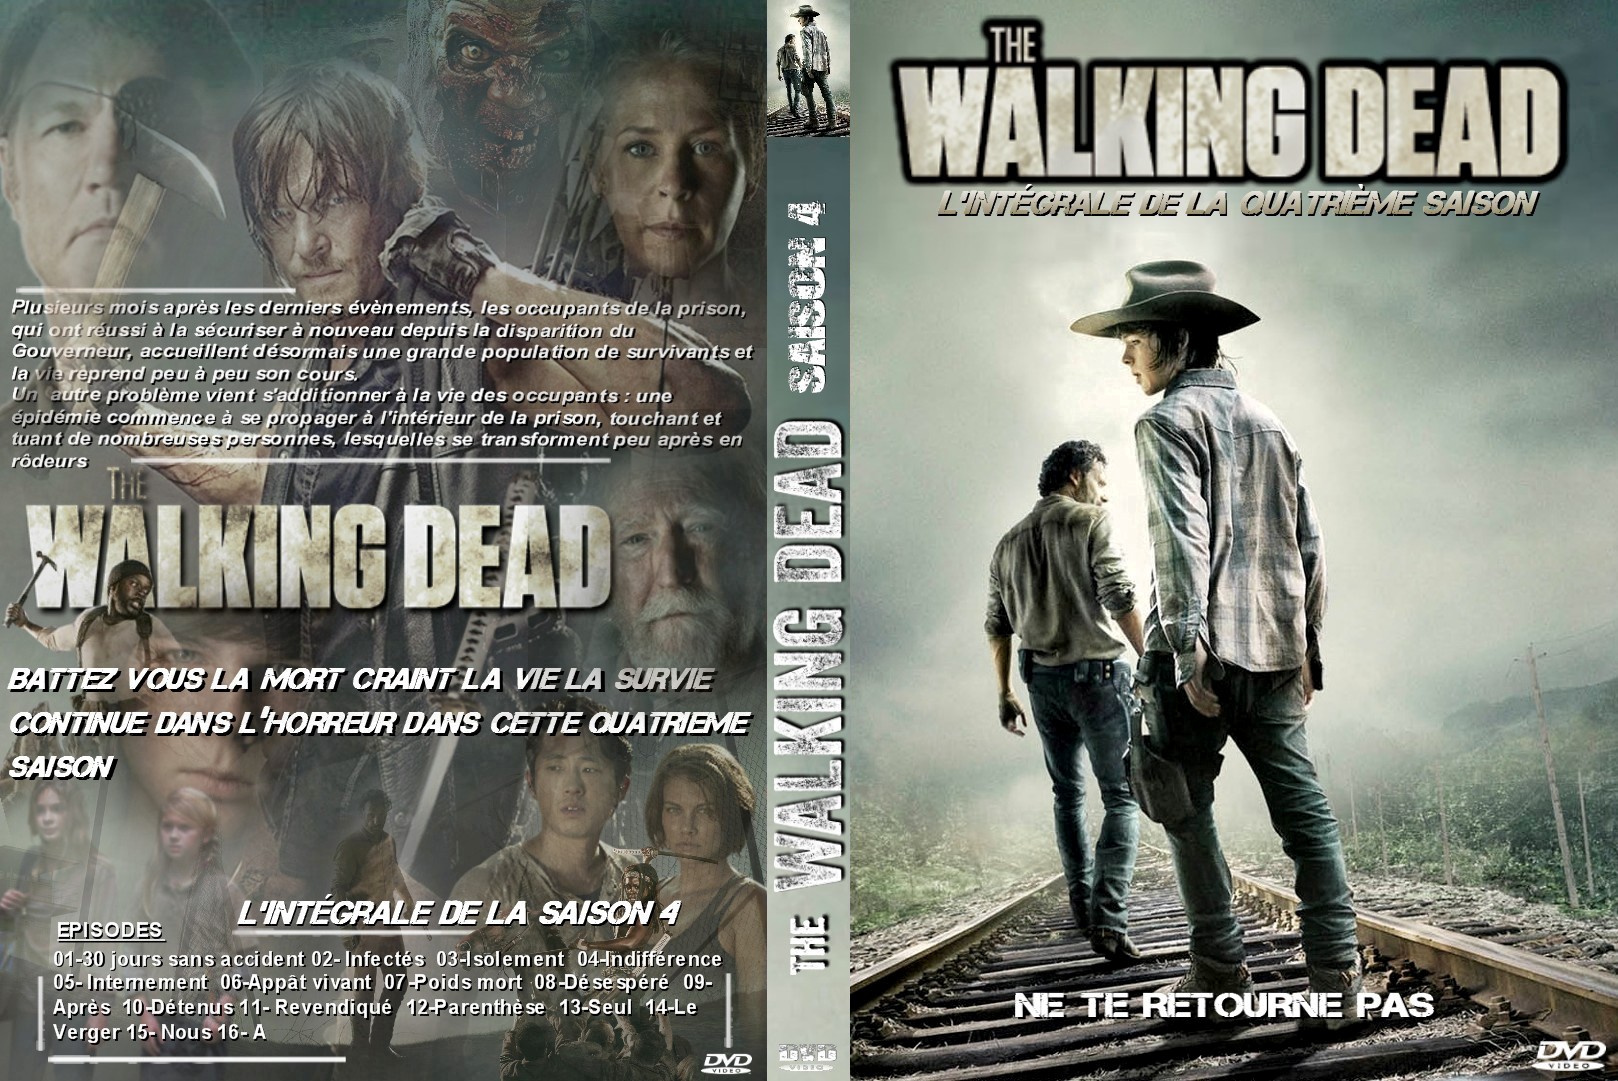 Jaquette DVD The Walking Dead Saison 4 custom